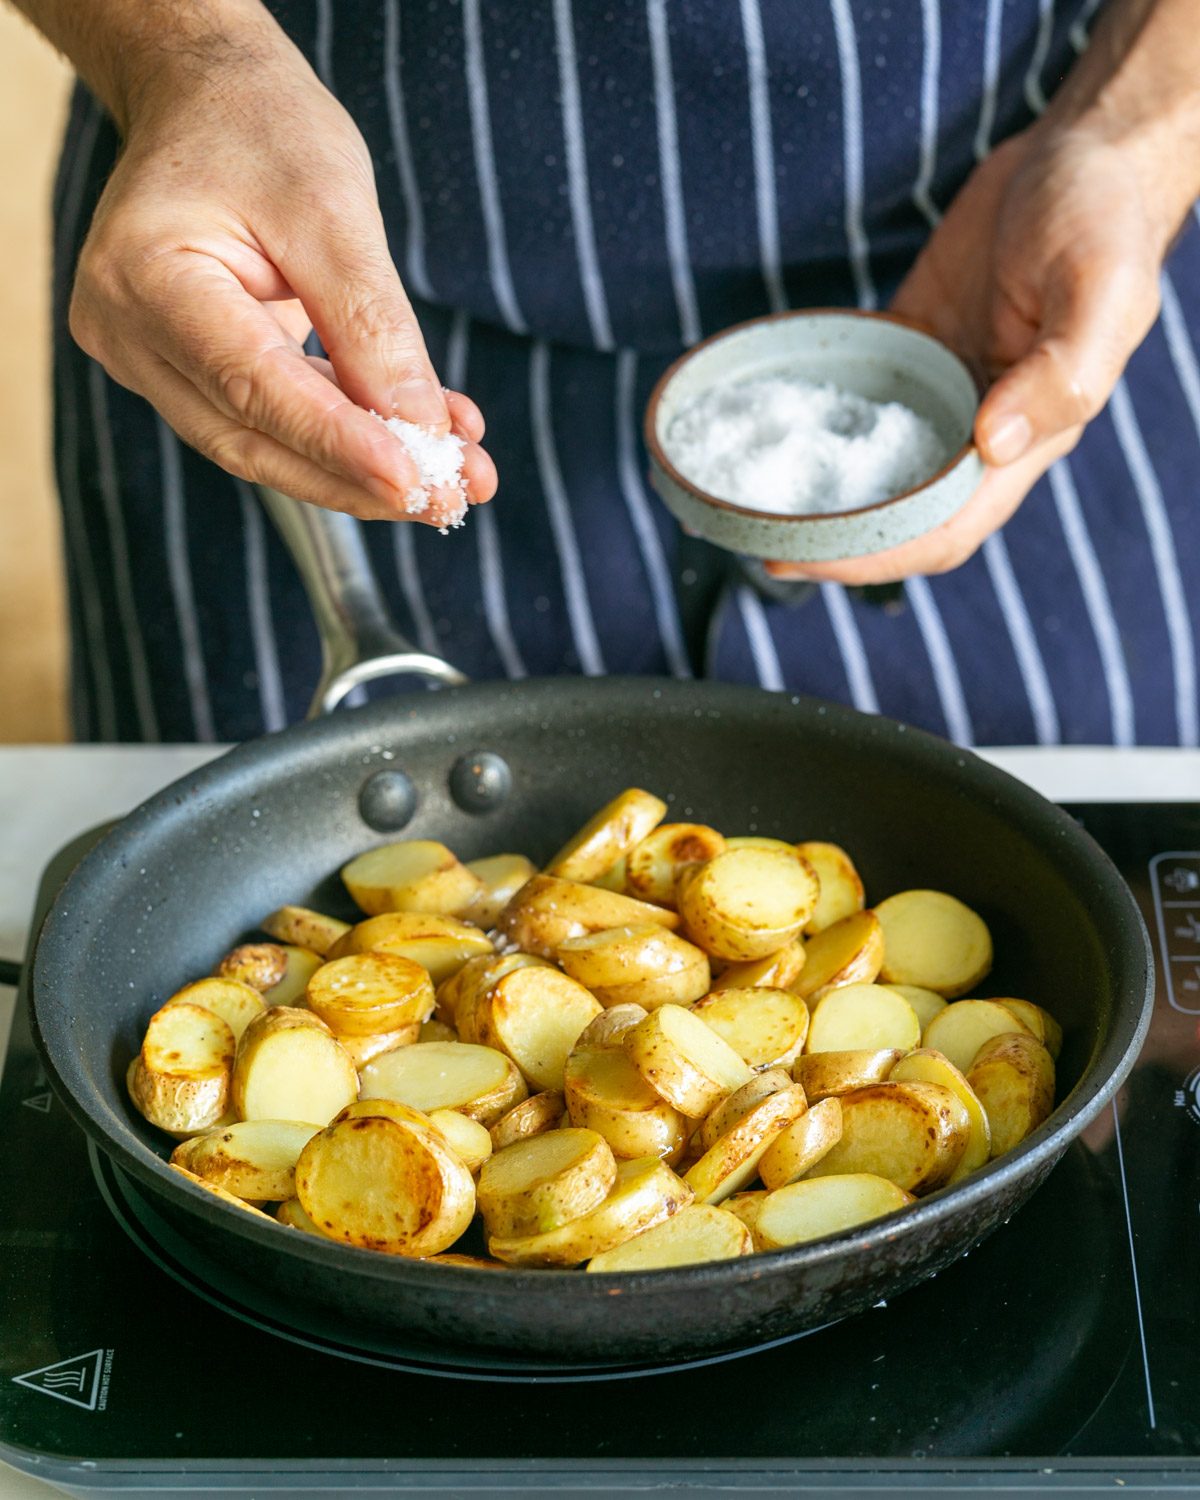 Adding salt while roasting kipfler potatoes